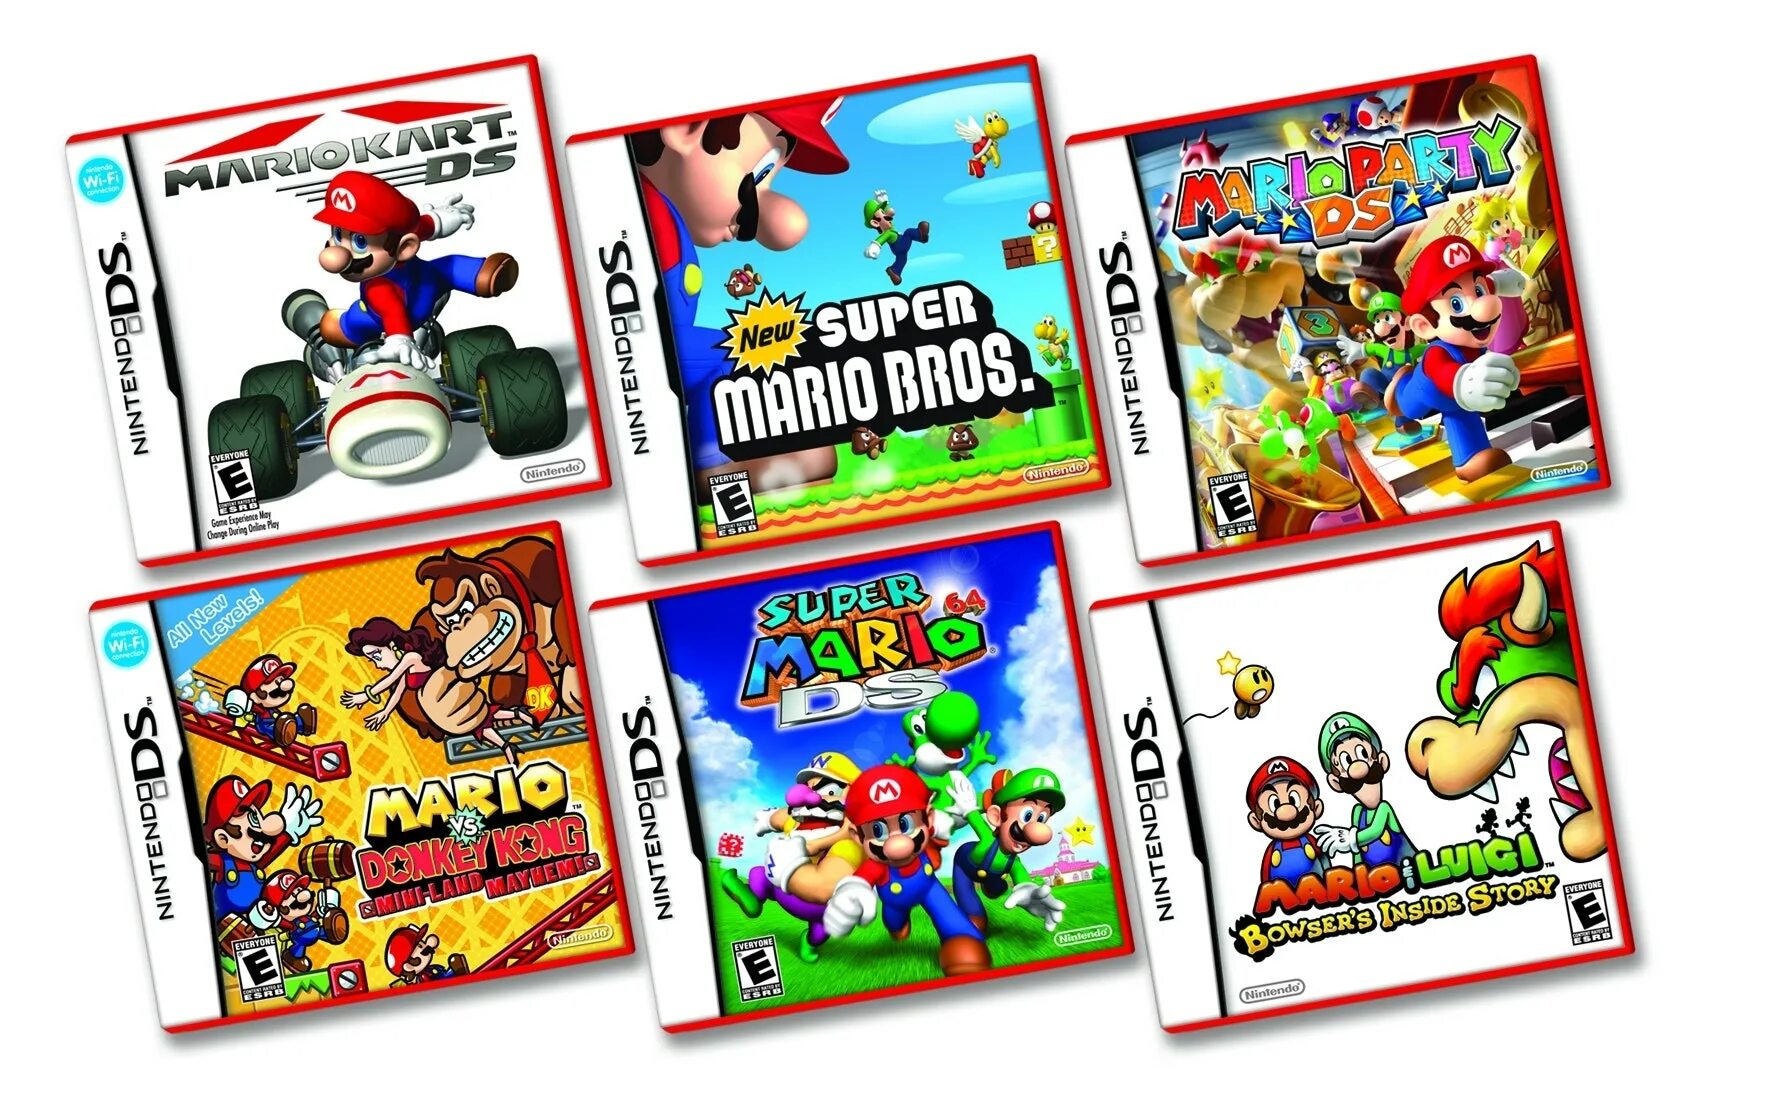 Mario nintendo ds. New super Mario Bros. Нинтендо ДС. Mario Kart DS картриджи для Nintendo 3ds. Нинтендо ДС Лайт супер Марио 64. Nintendo DS super Mario.